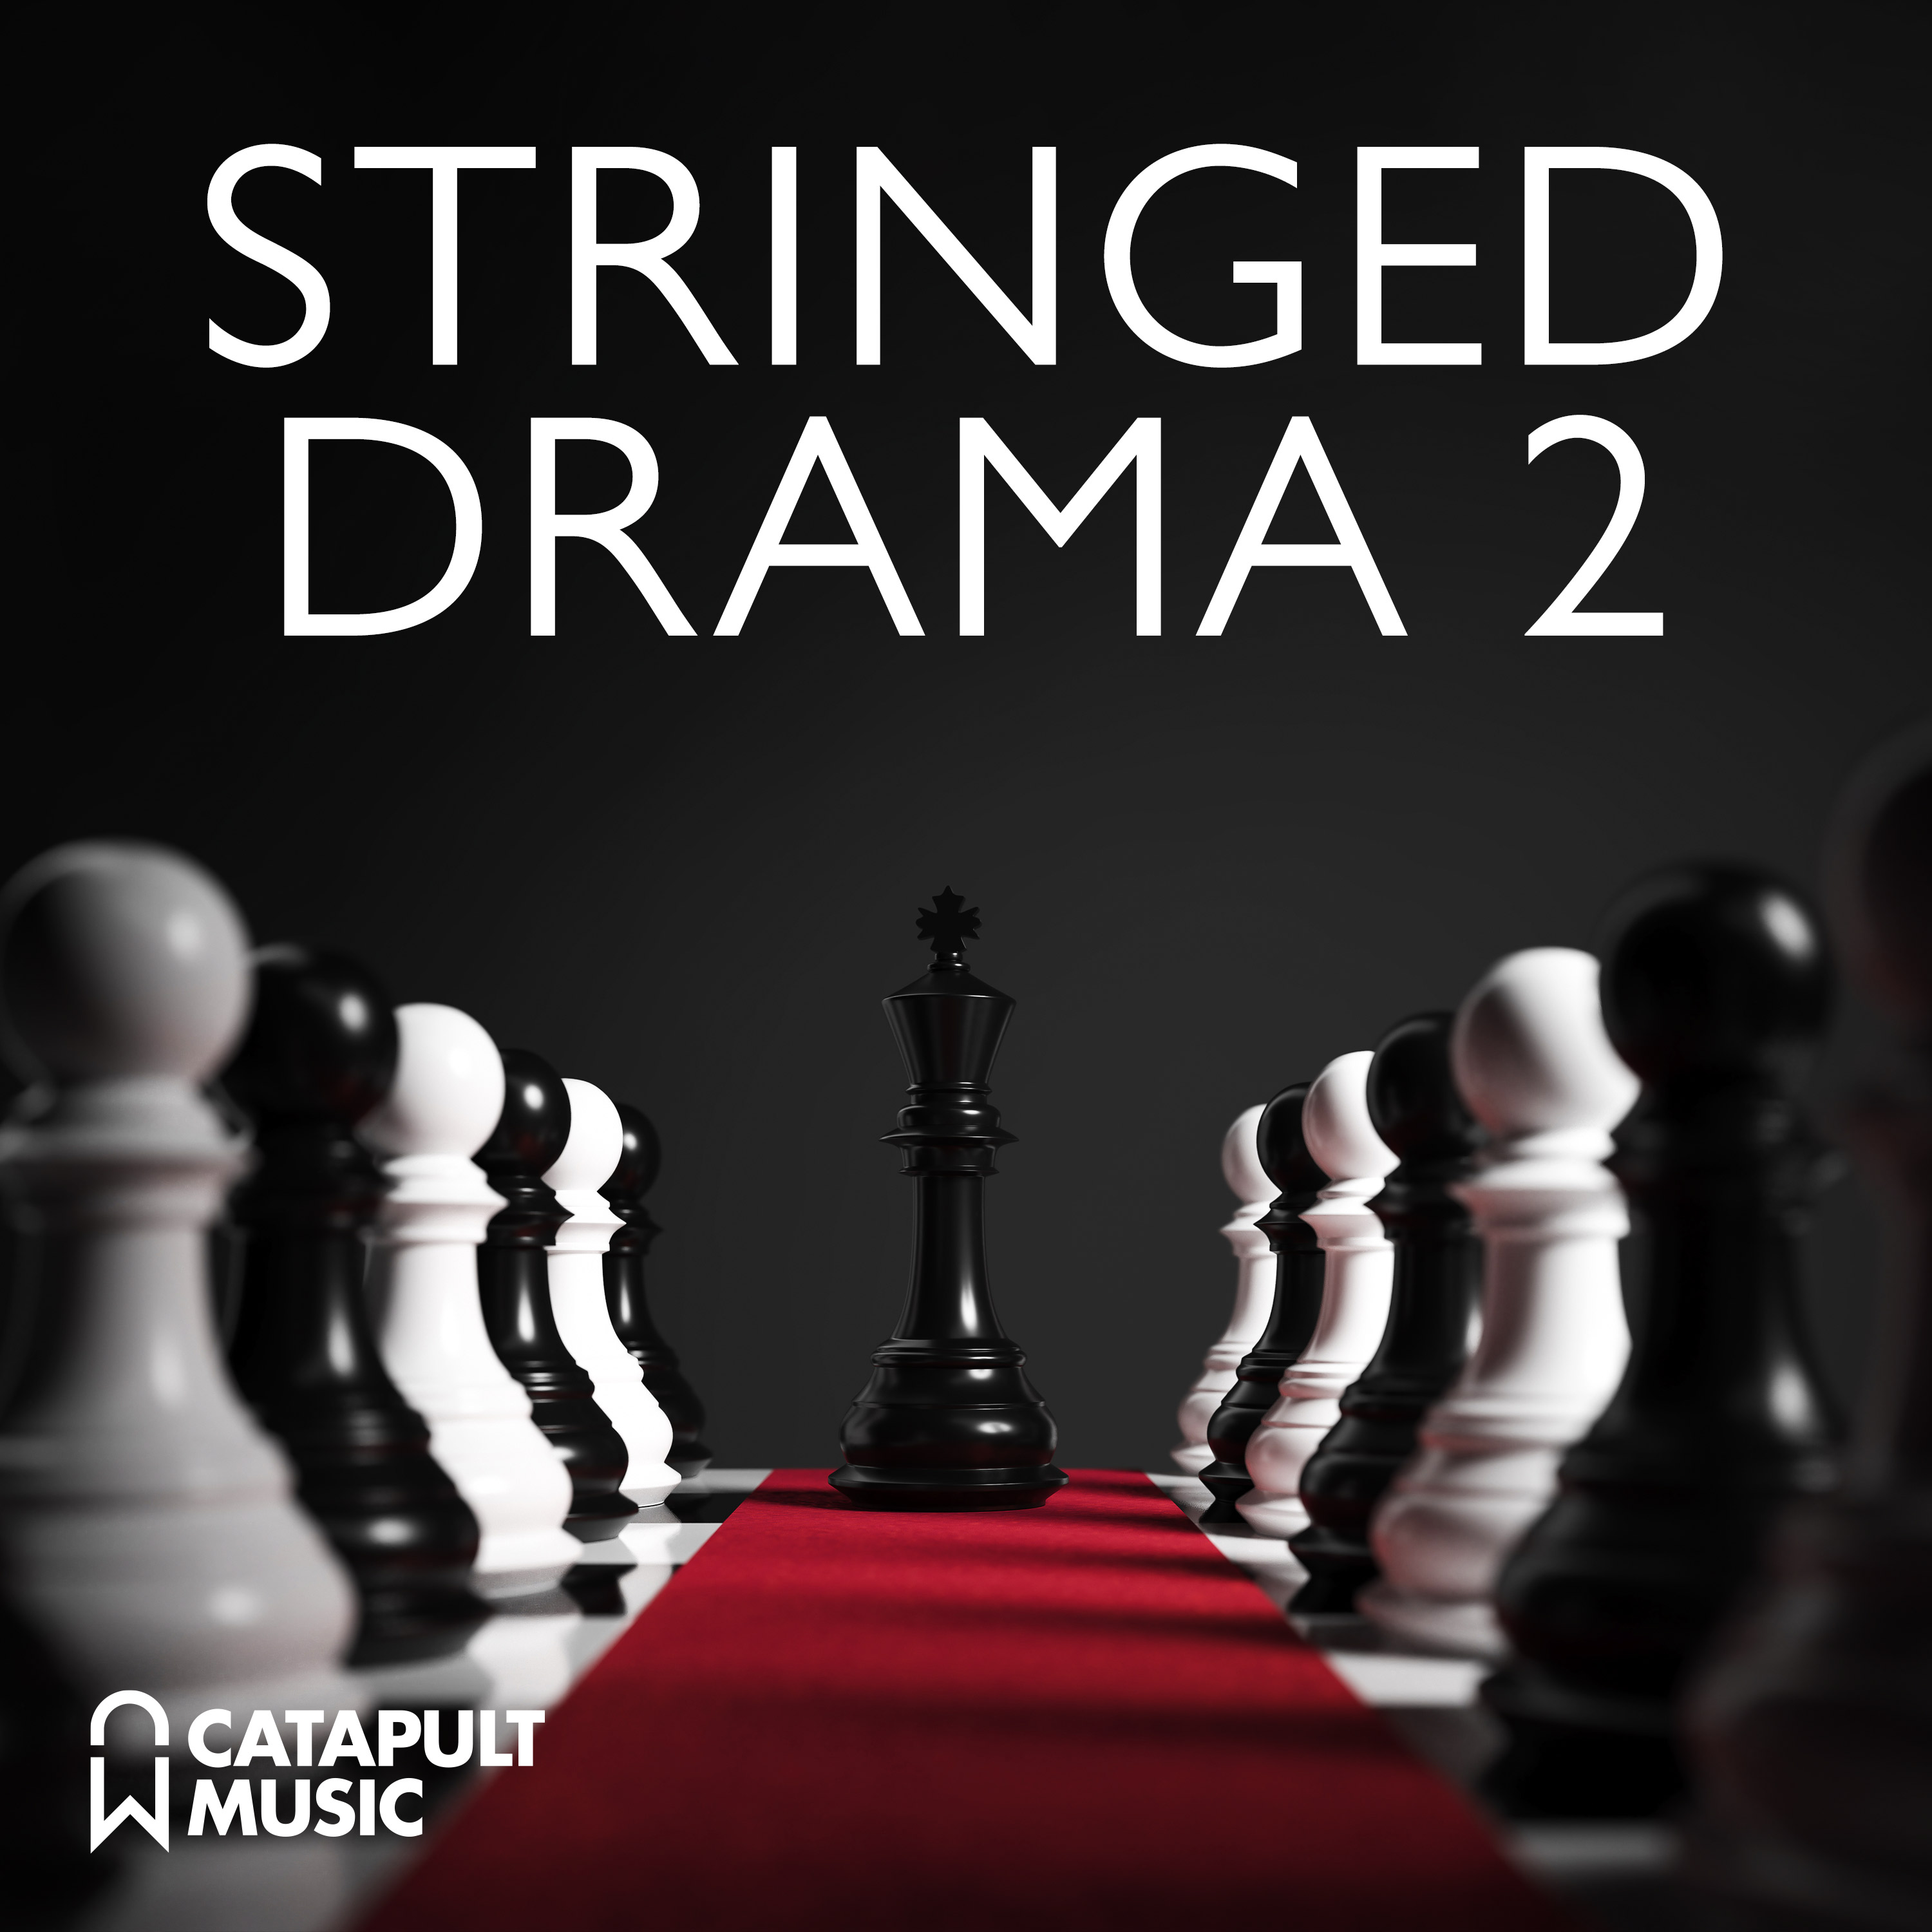 Stringed Drama 2